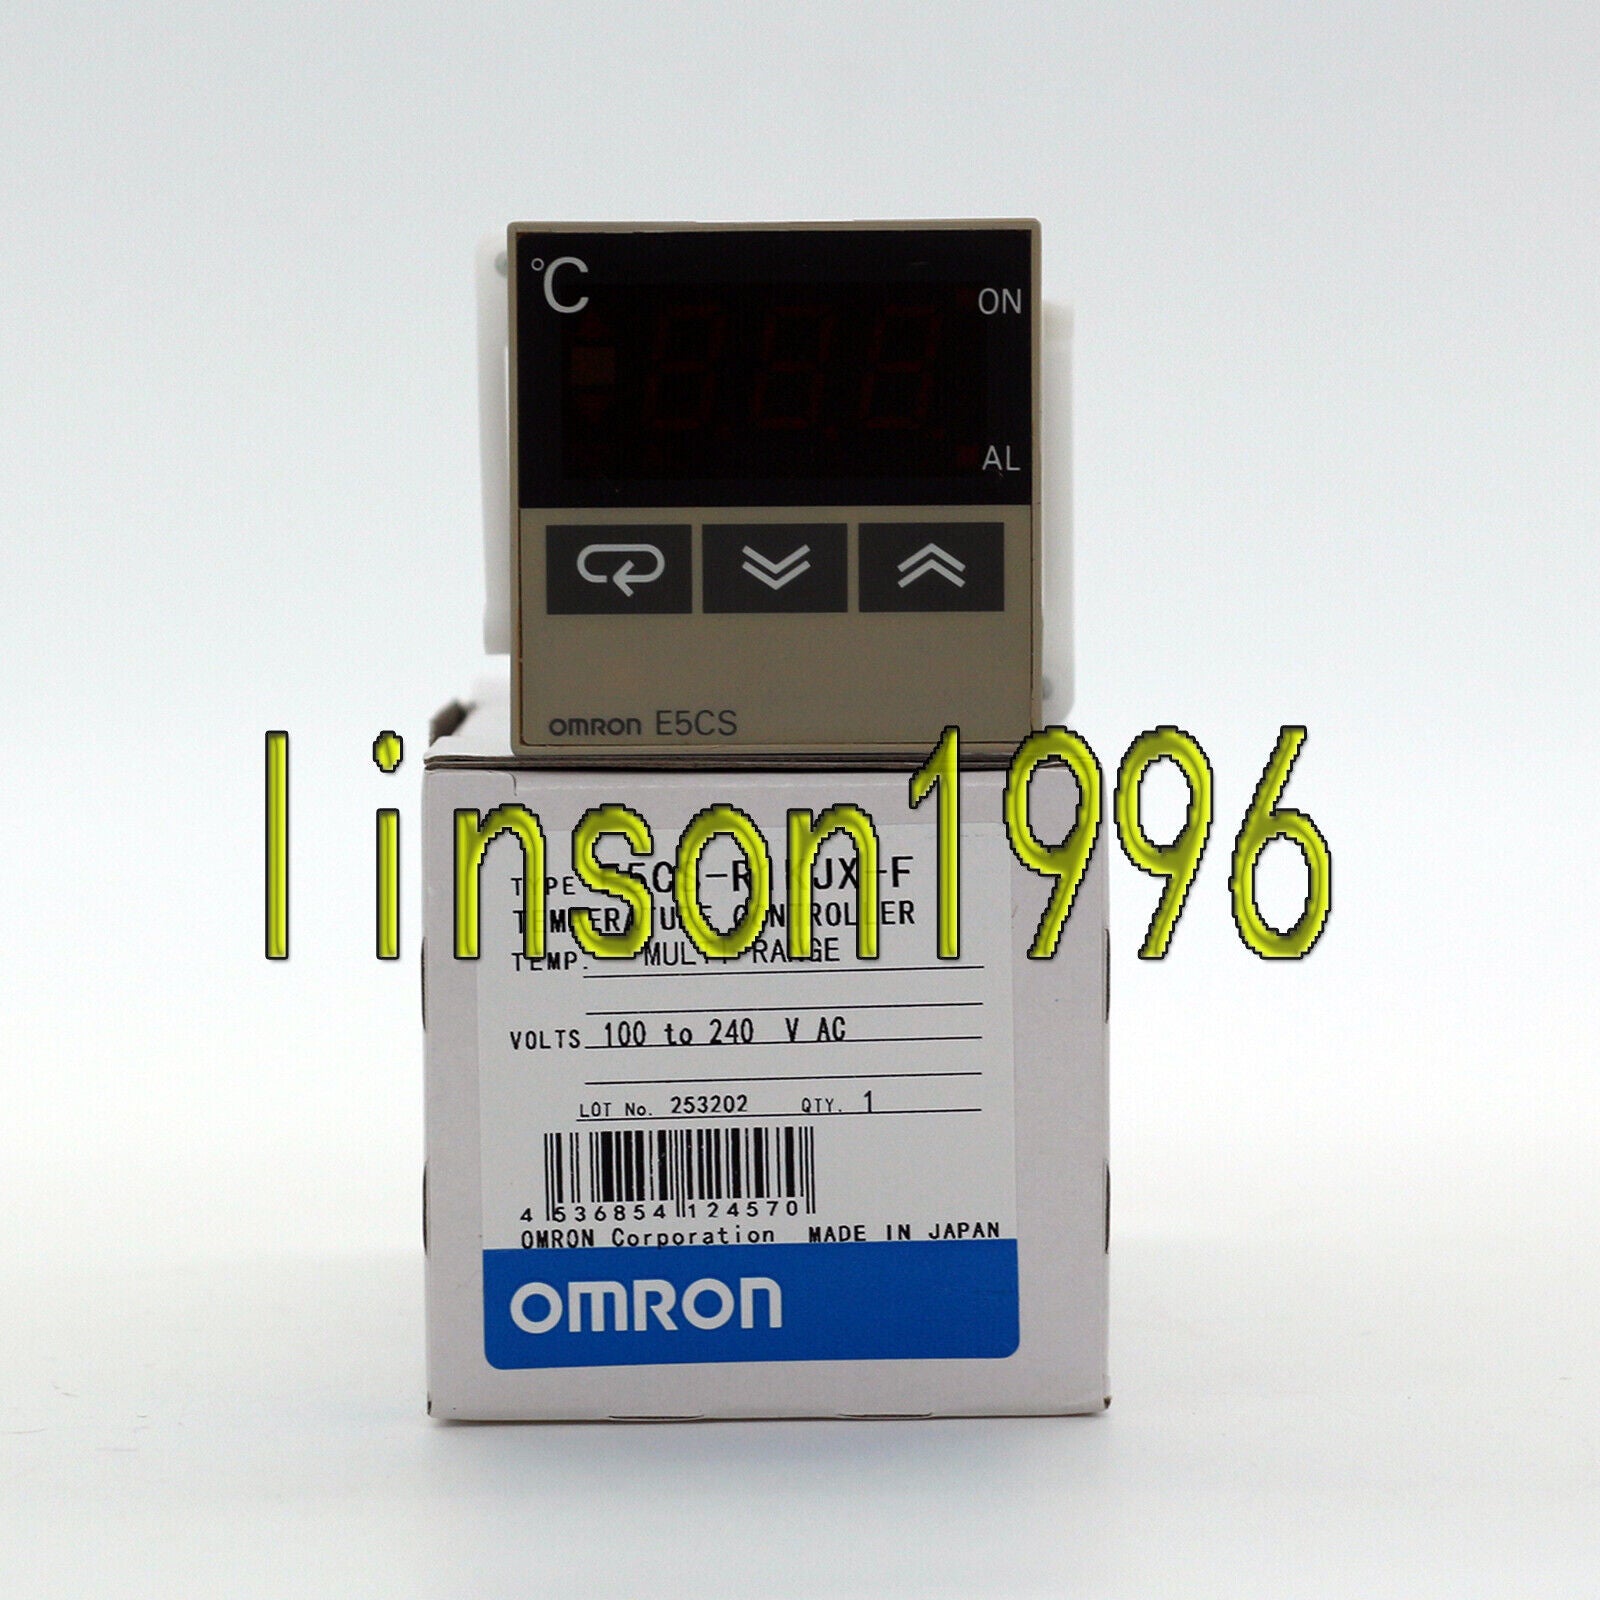 new ONE  Other Omron E5CS-R1KJX-F Temperature ControllerItem